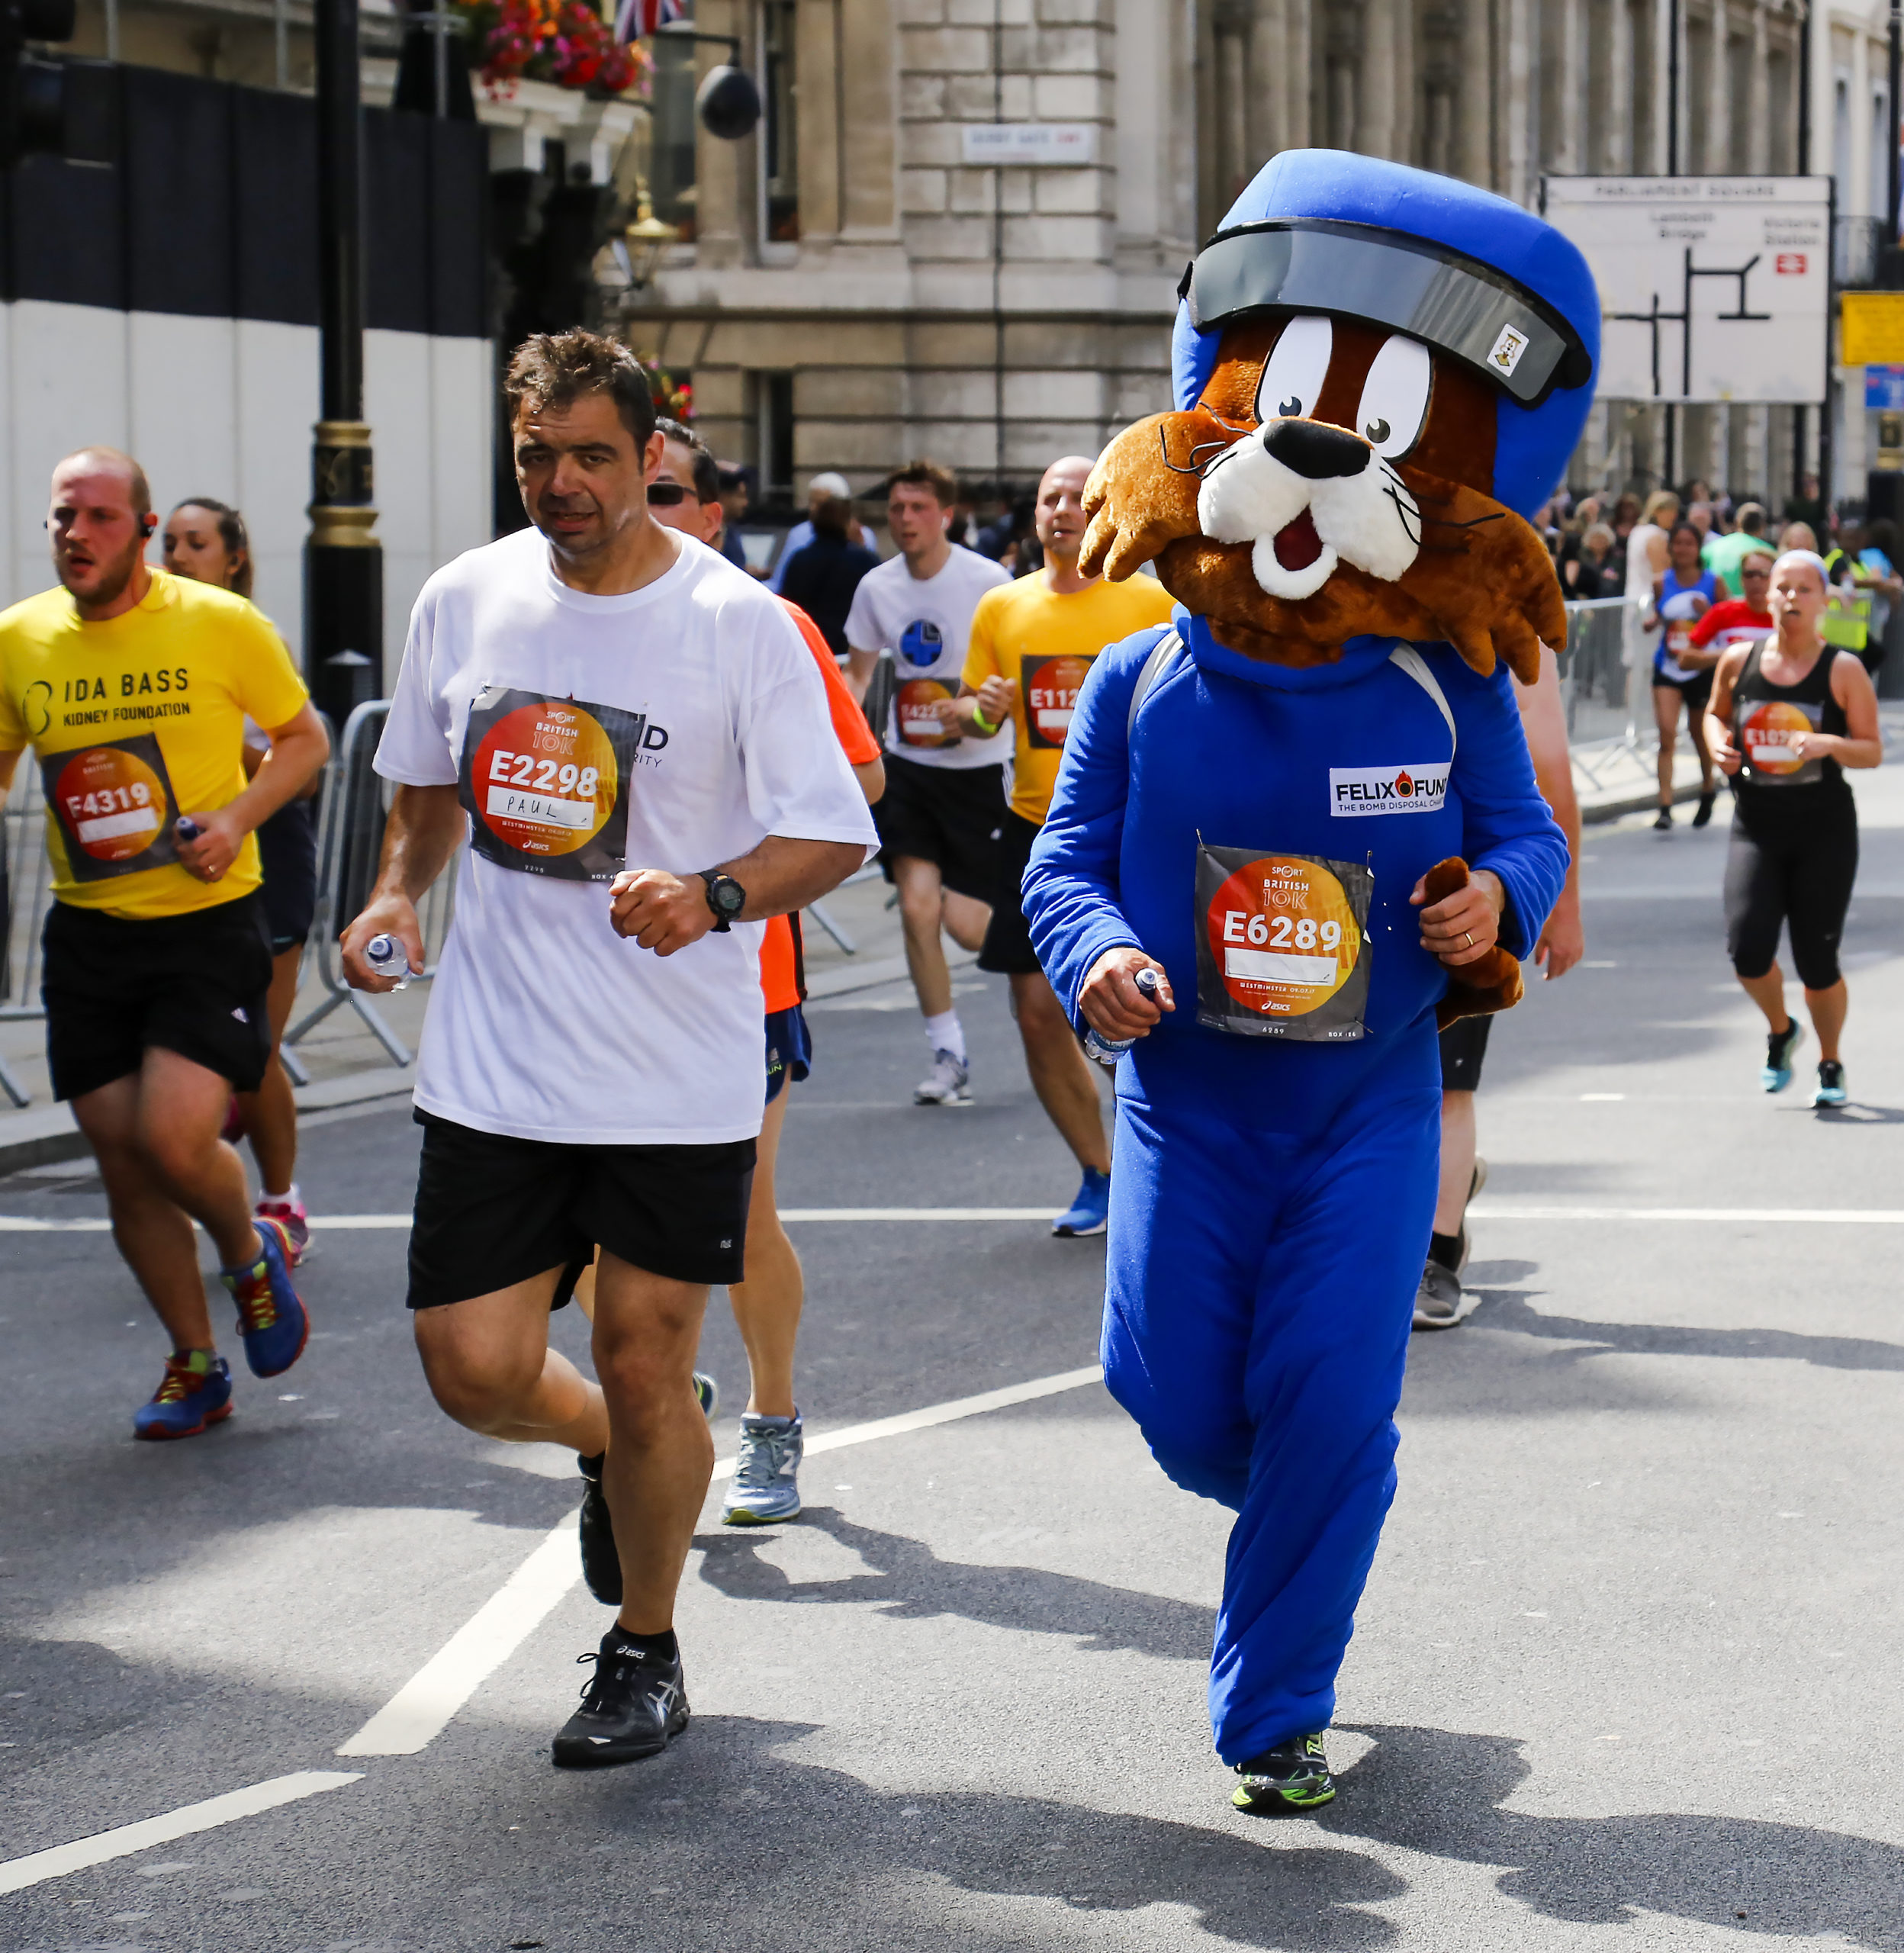 Felix mascot running the London10K